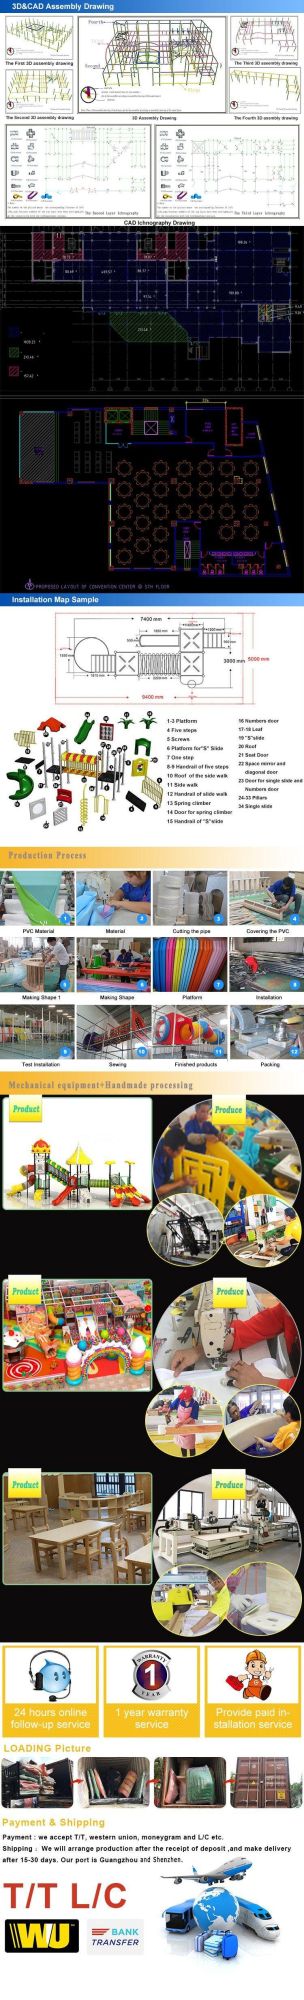 A01 Kids Public Plastic Outdoor Playground Equipment Slide